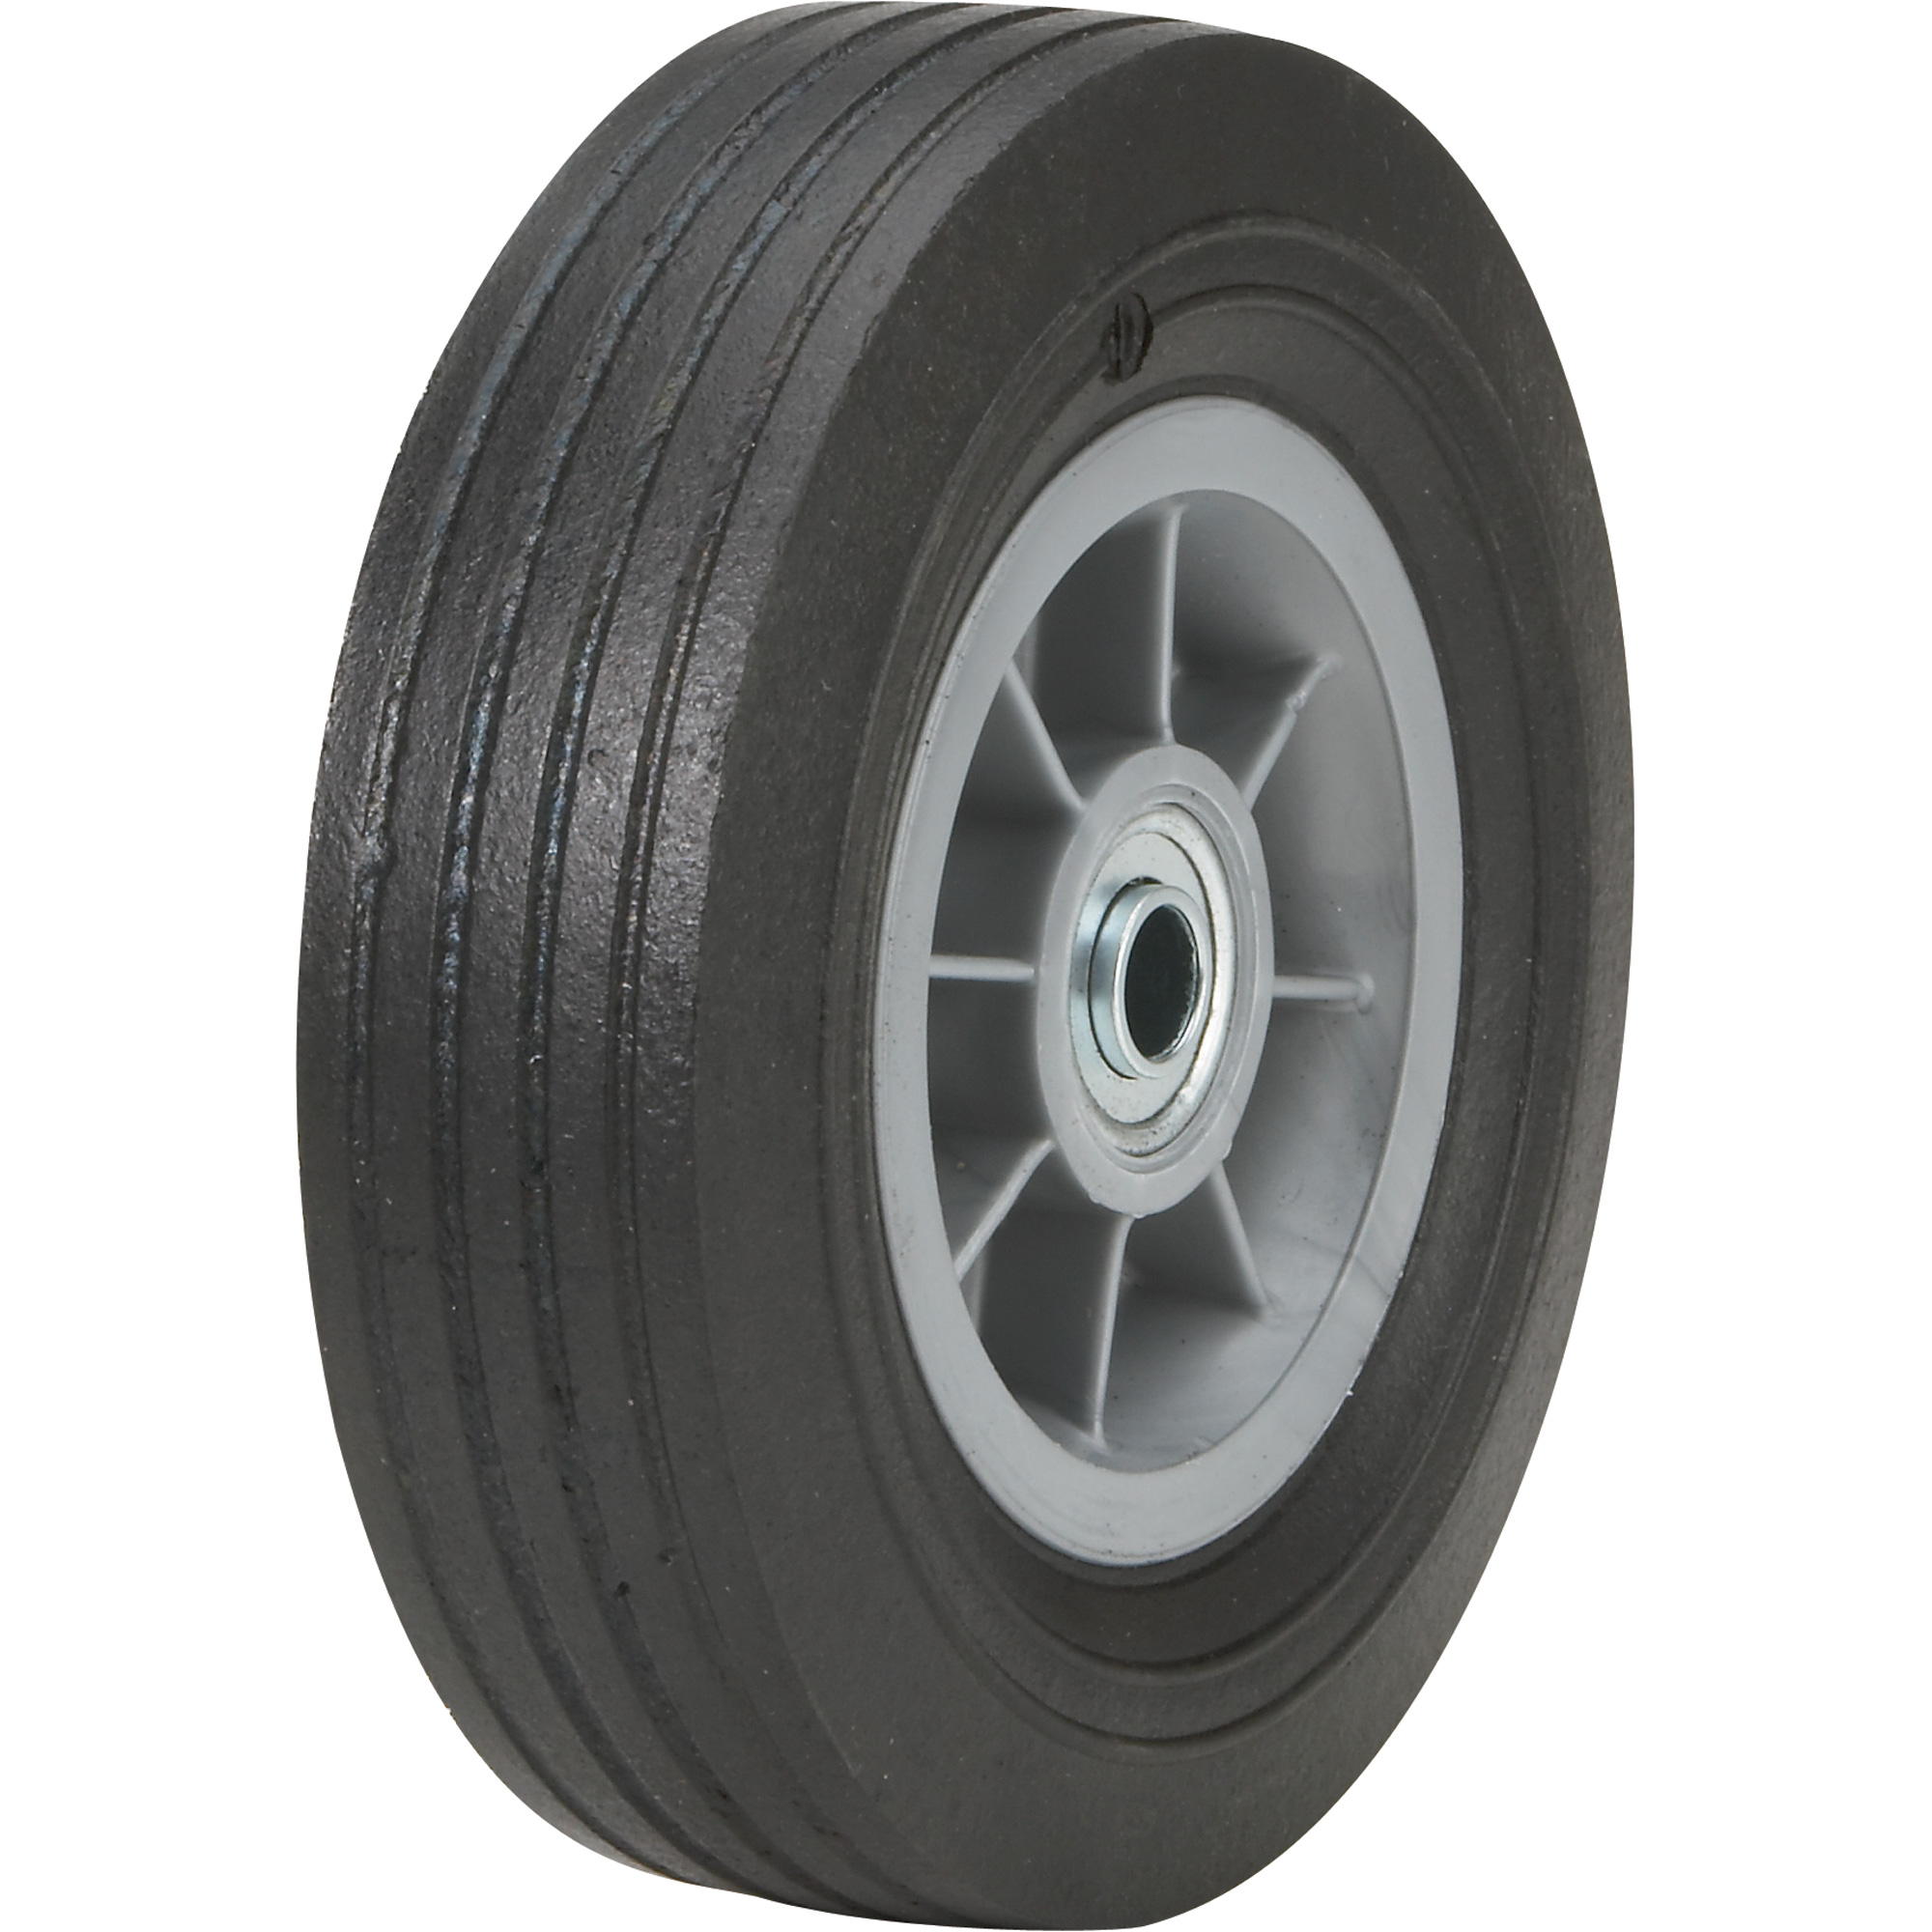 2.50-8 solid rubber wheel for wheelbarrow